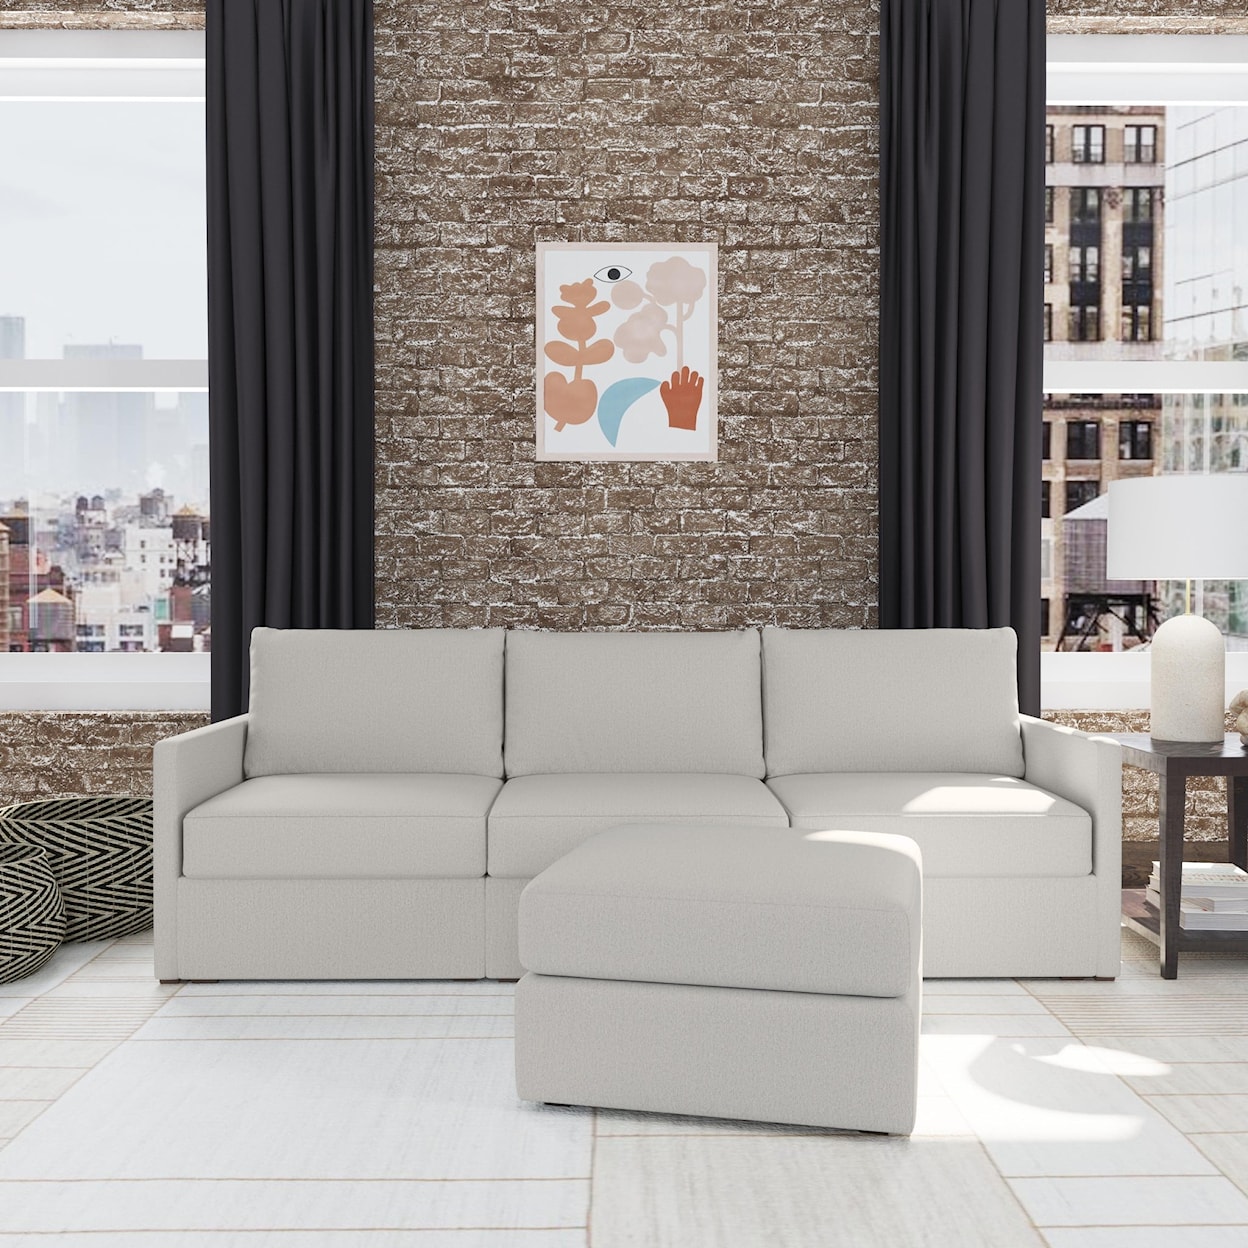 Flexsteel Flex Sofa with Ottoman